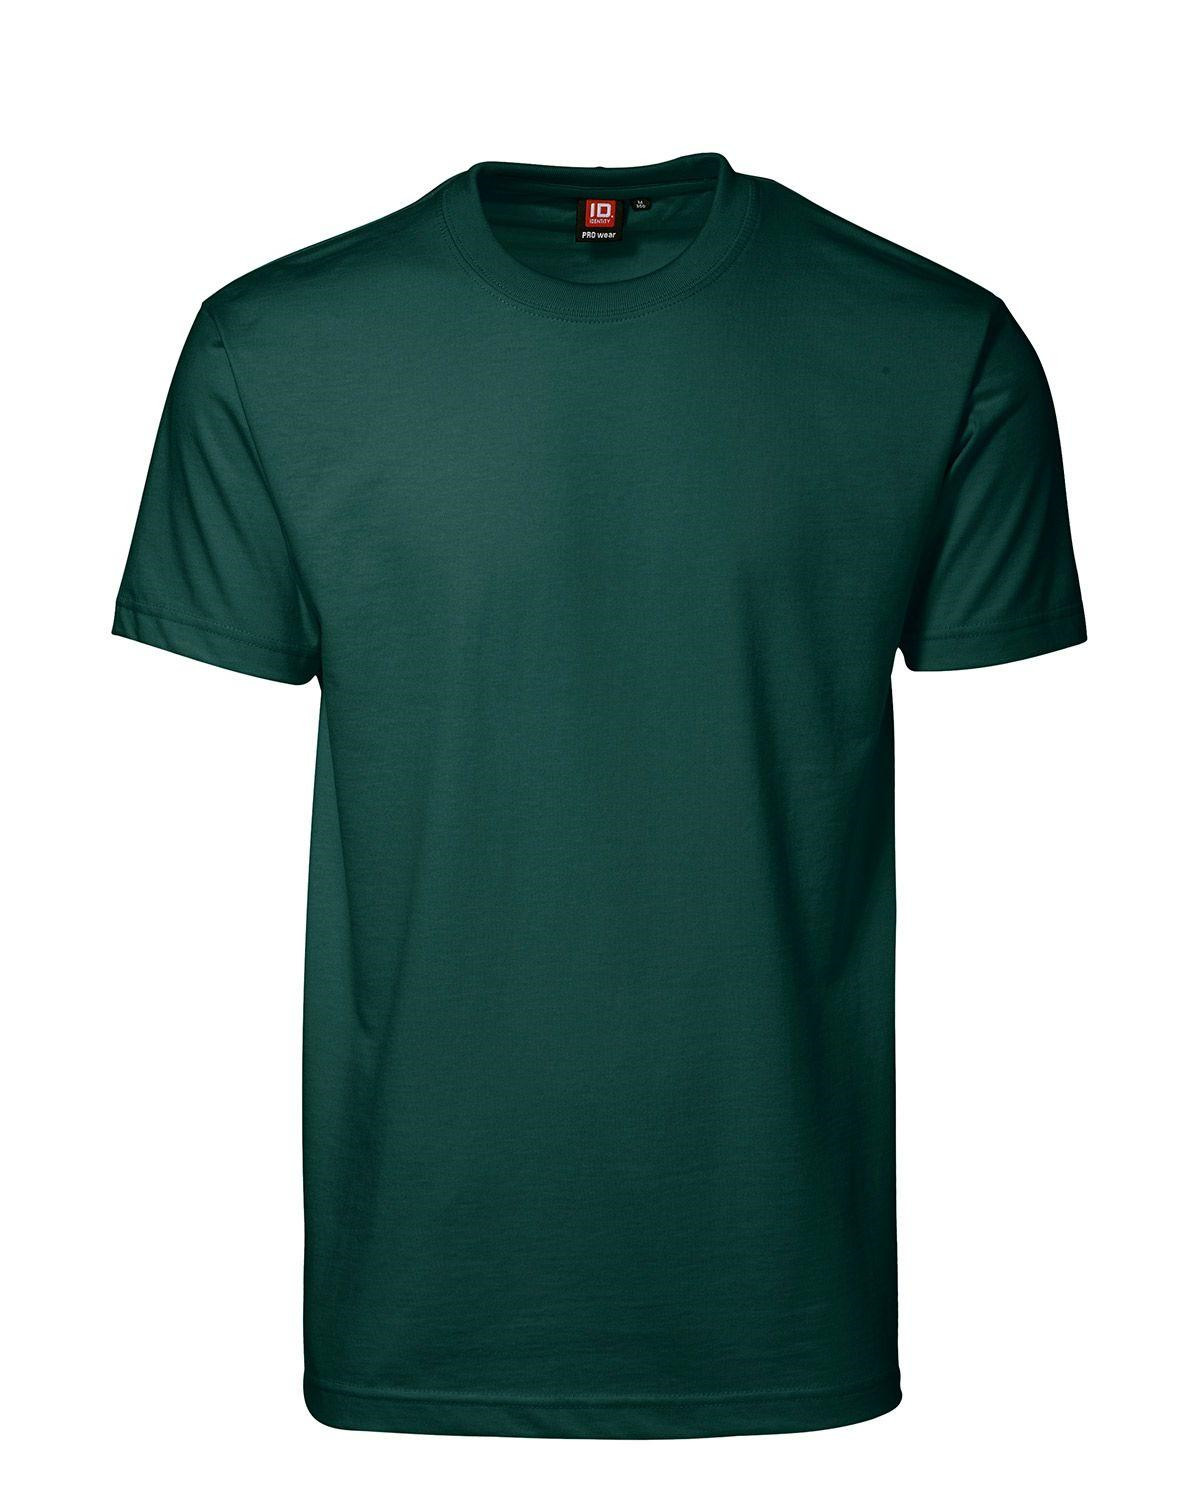 ID PRO Wear T-shirt til Herre (Flaskegrøn, M)